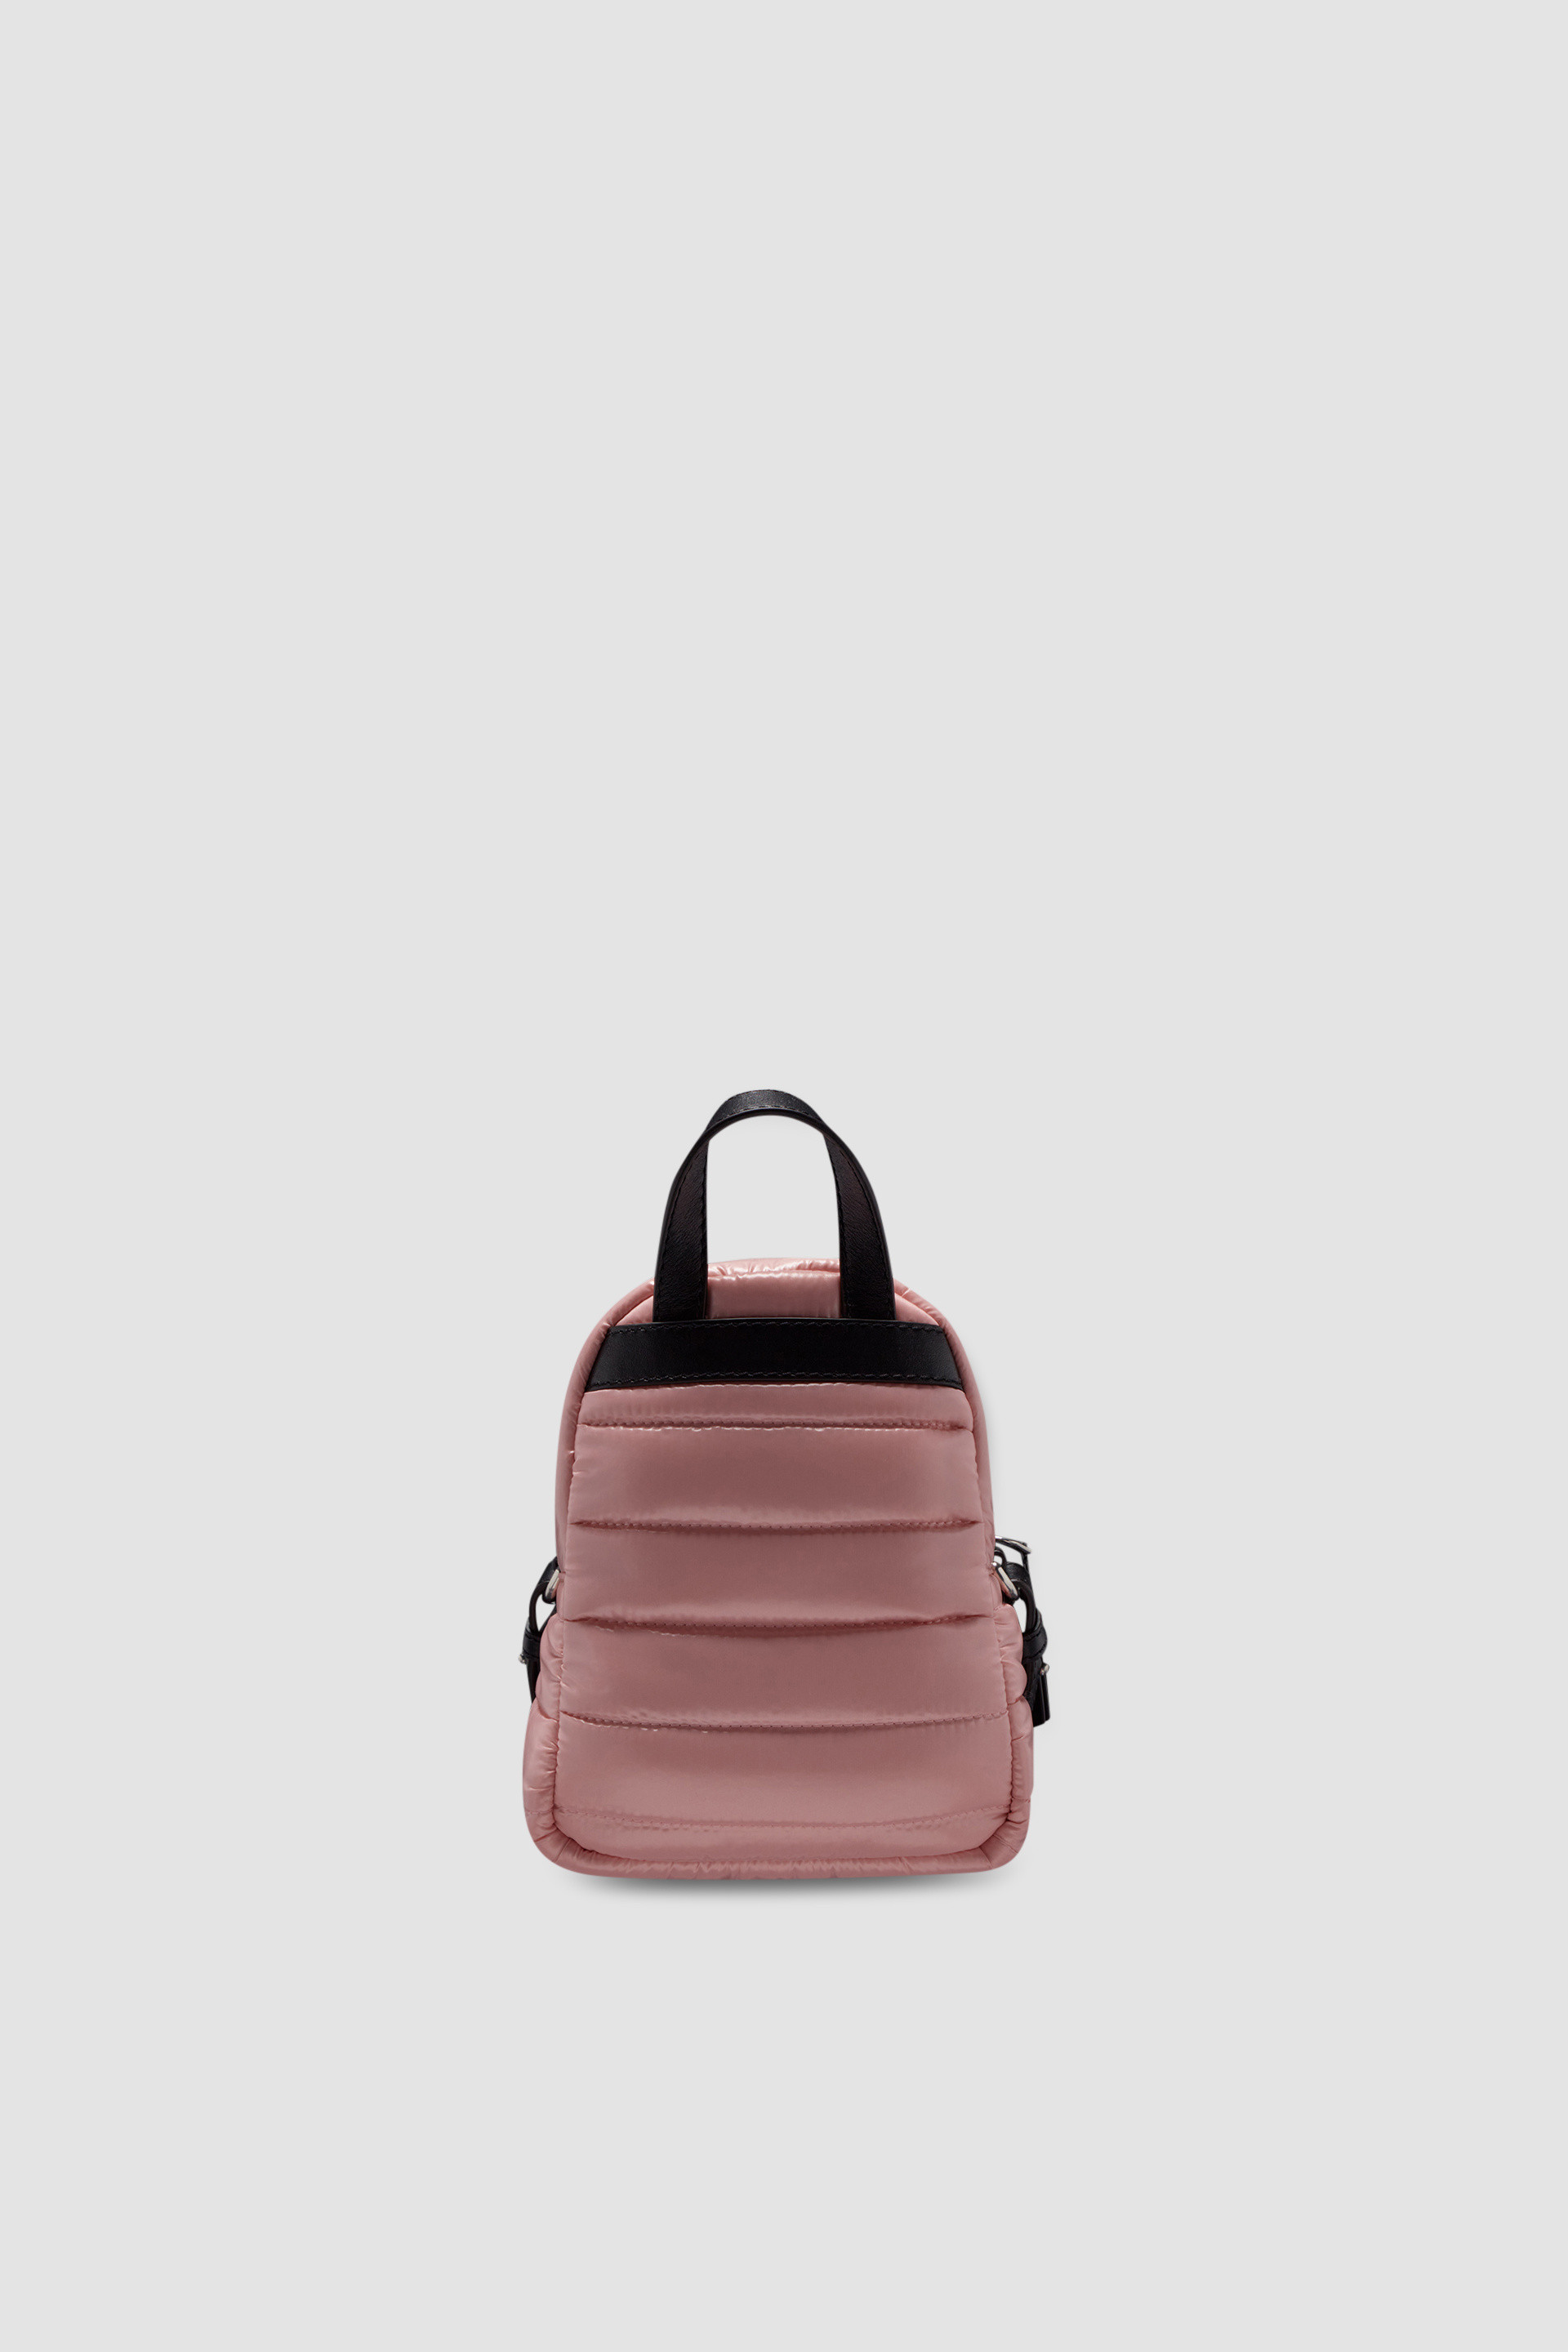 Moncler Bags & Handbags for Women for sale